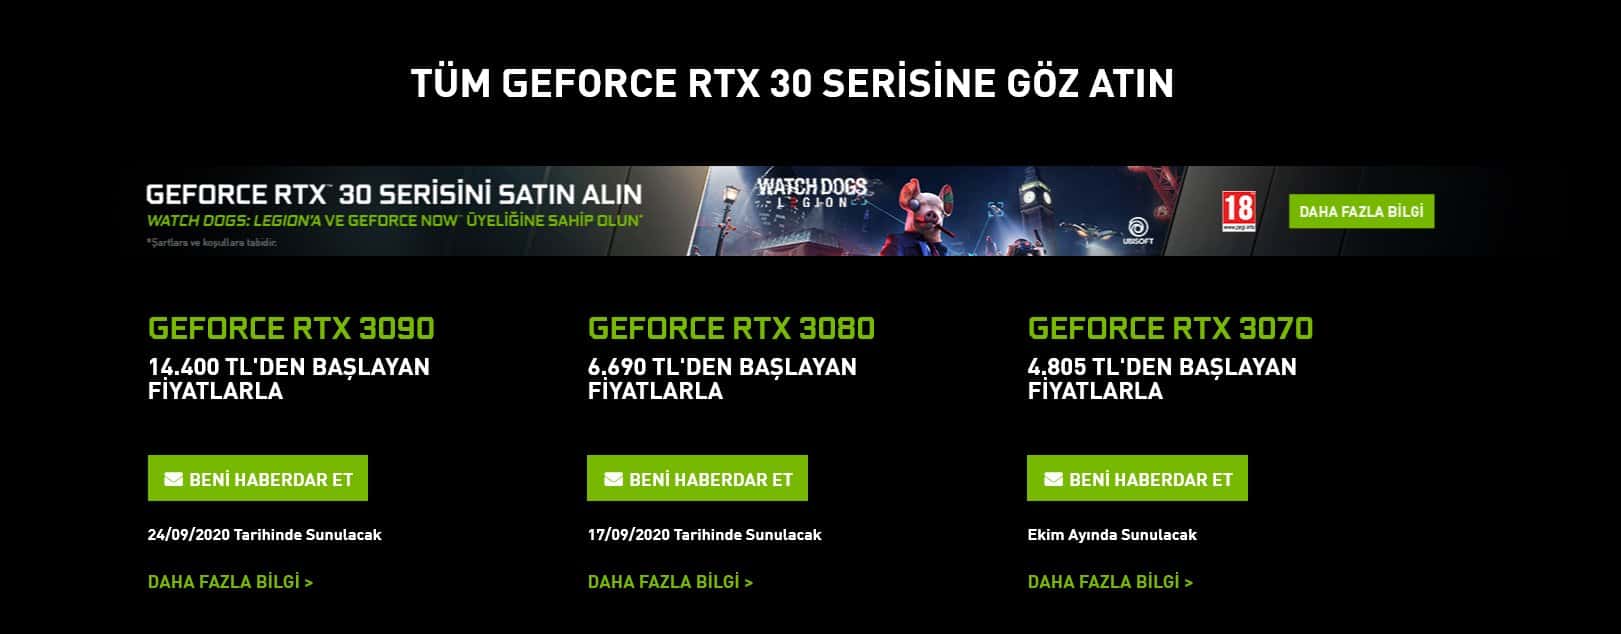 NVIDIA GeForce RTX 3000